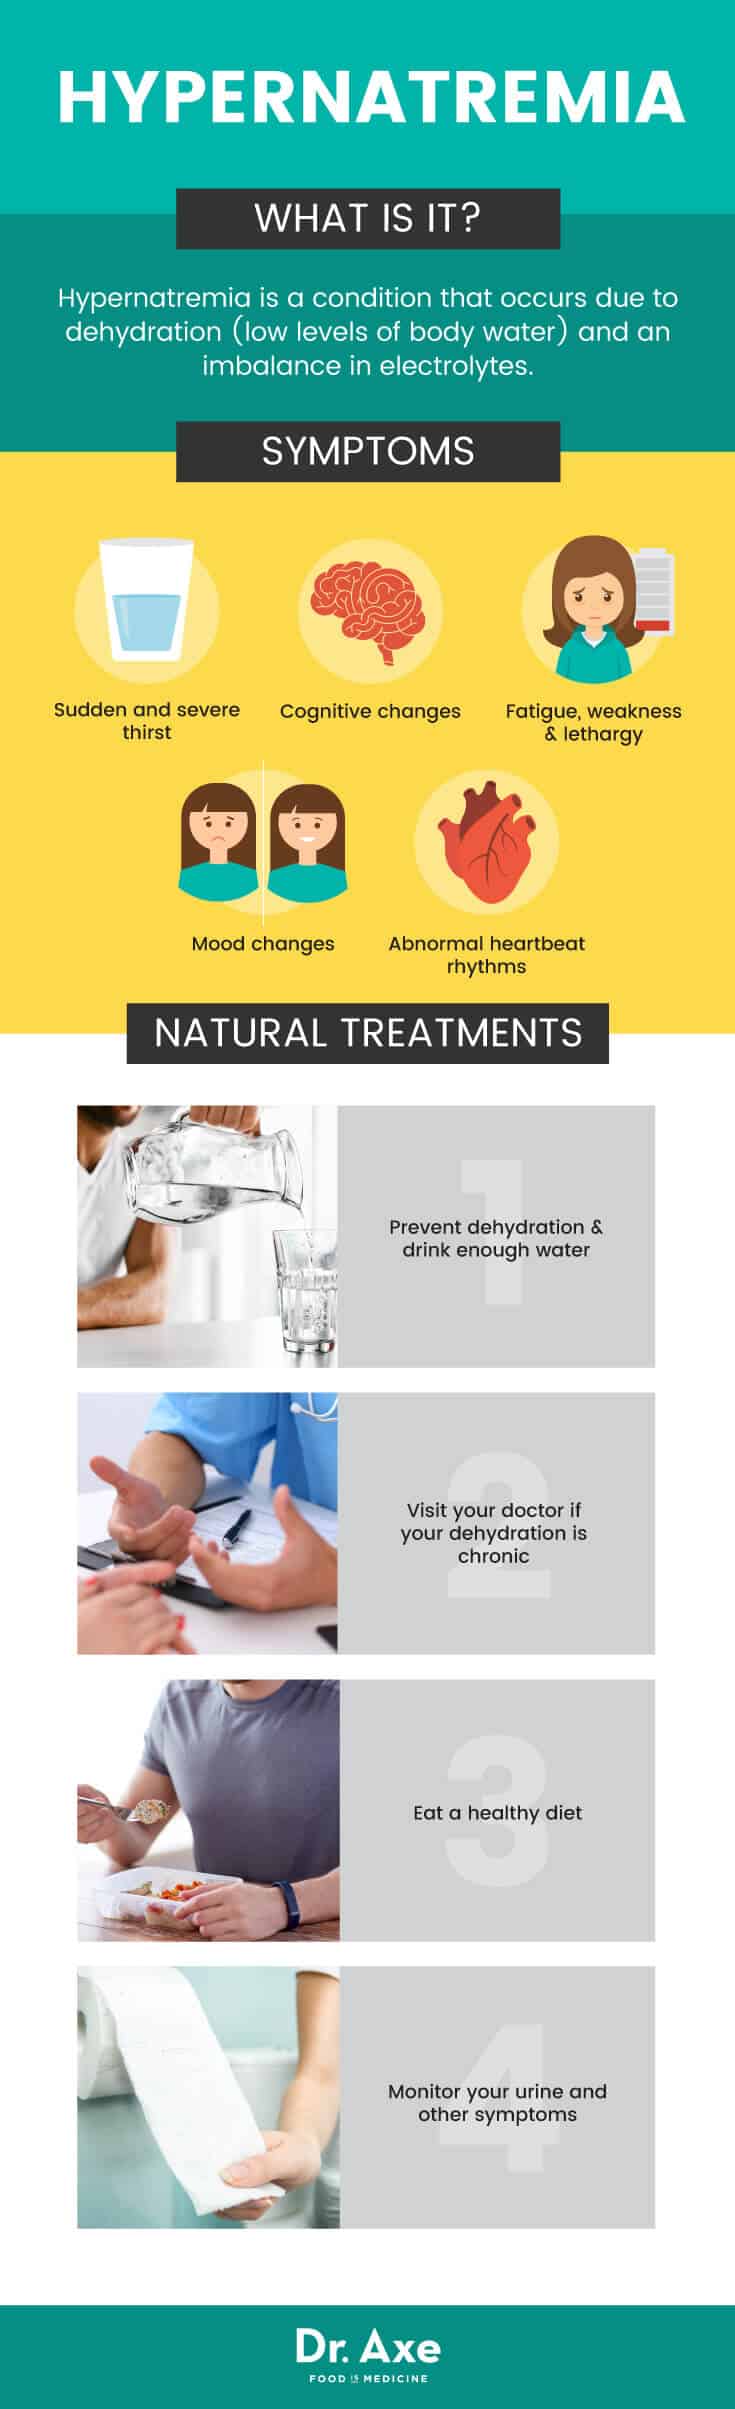 Hypernatremia natural treatments